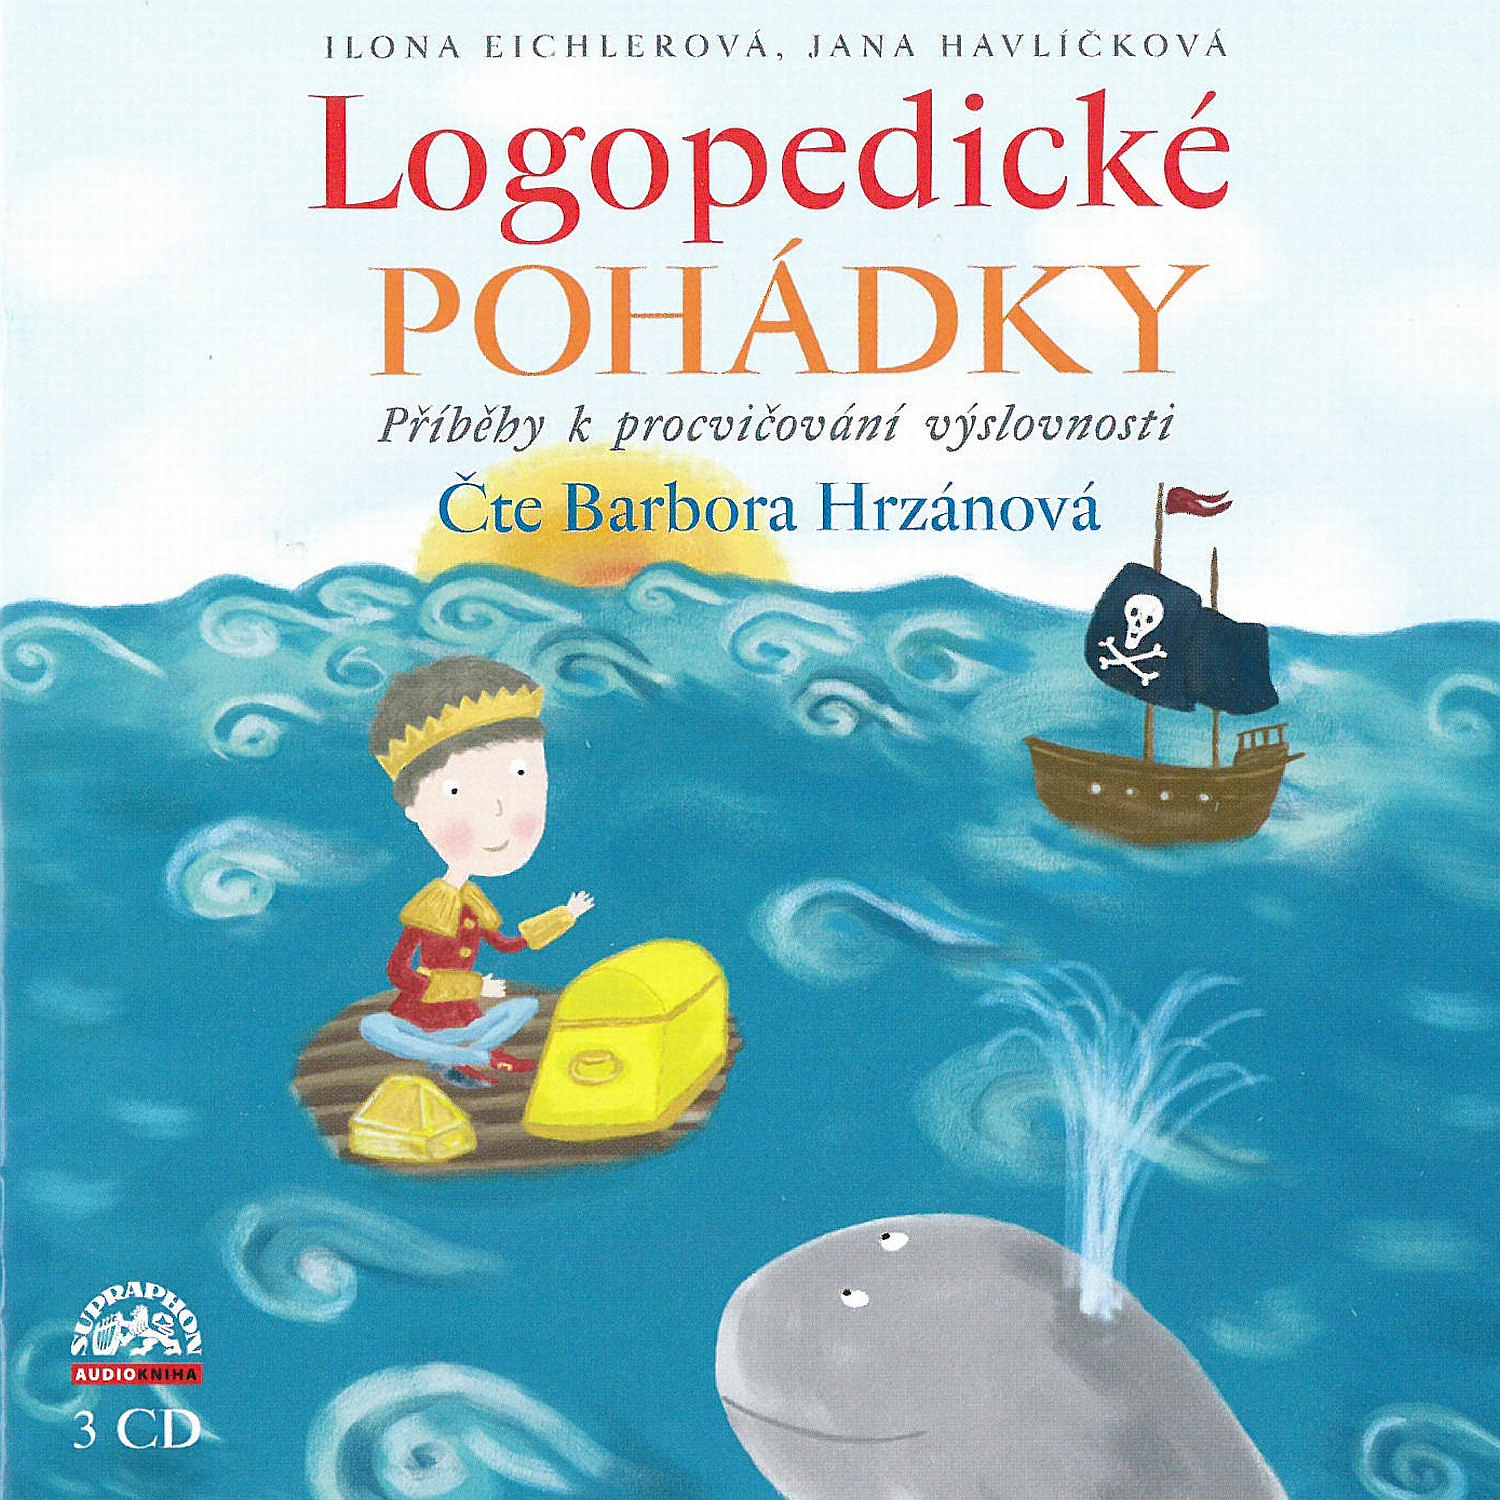 CD Shop - HRZANOVA BARA EICHLEROVA & HAVLICKOVA: LOGOPEDICKE POHADKY